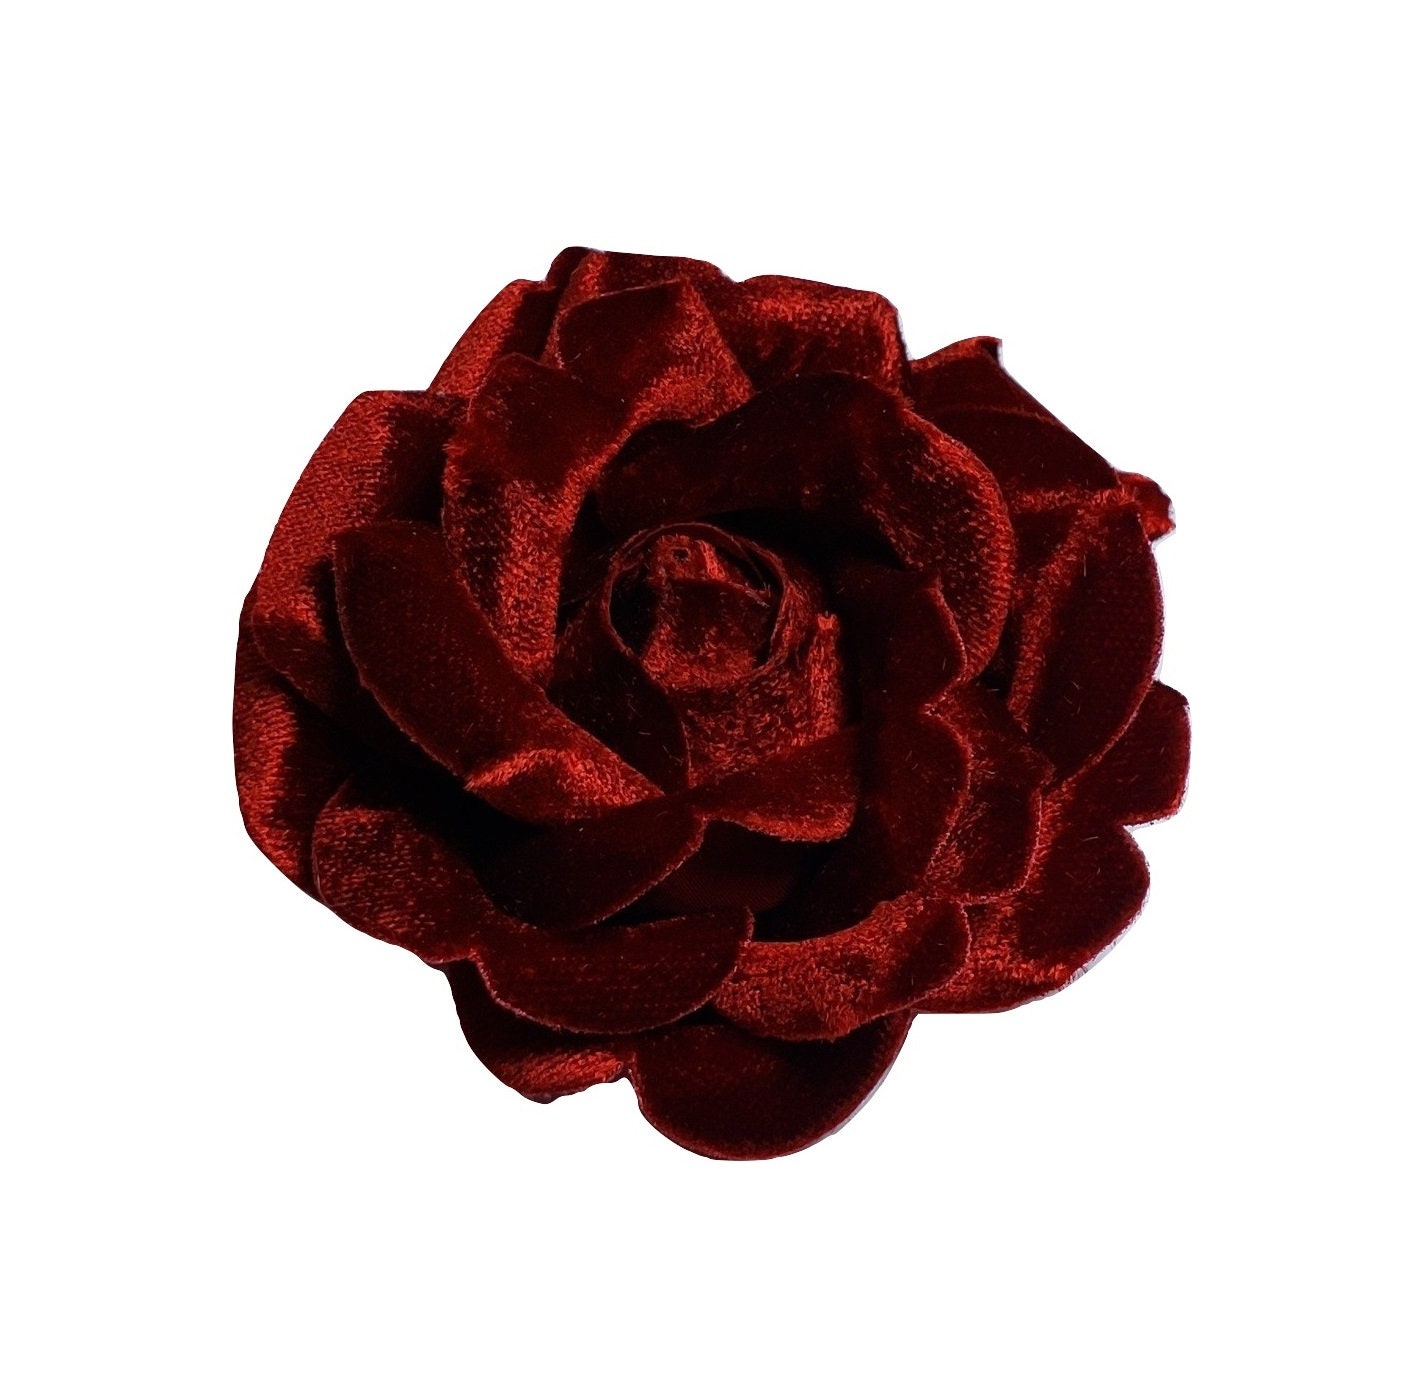 SchmalbergFlowersNYC M&S Schmalberg Red Velvet Rose Fabric Flower Brooch Pin - Approx 3.5 Made in USA